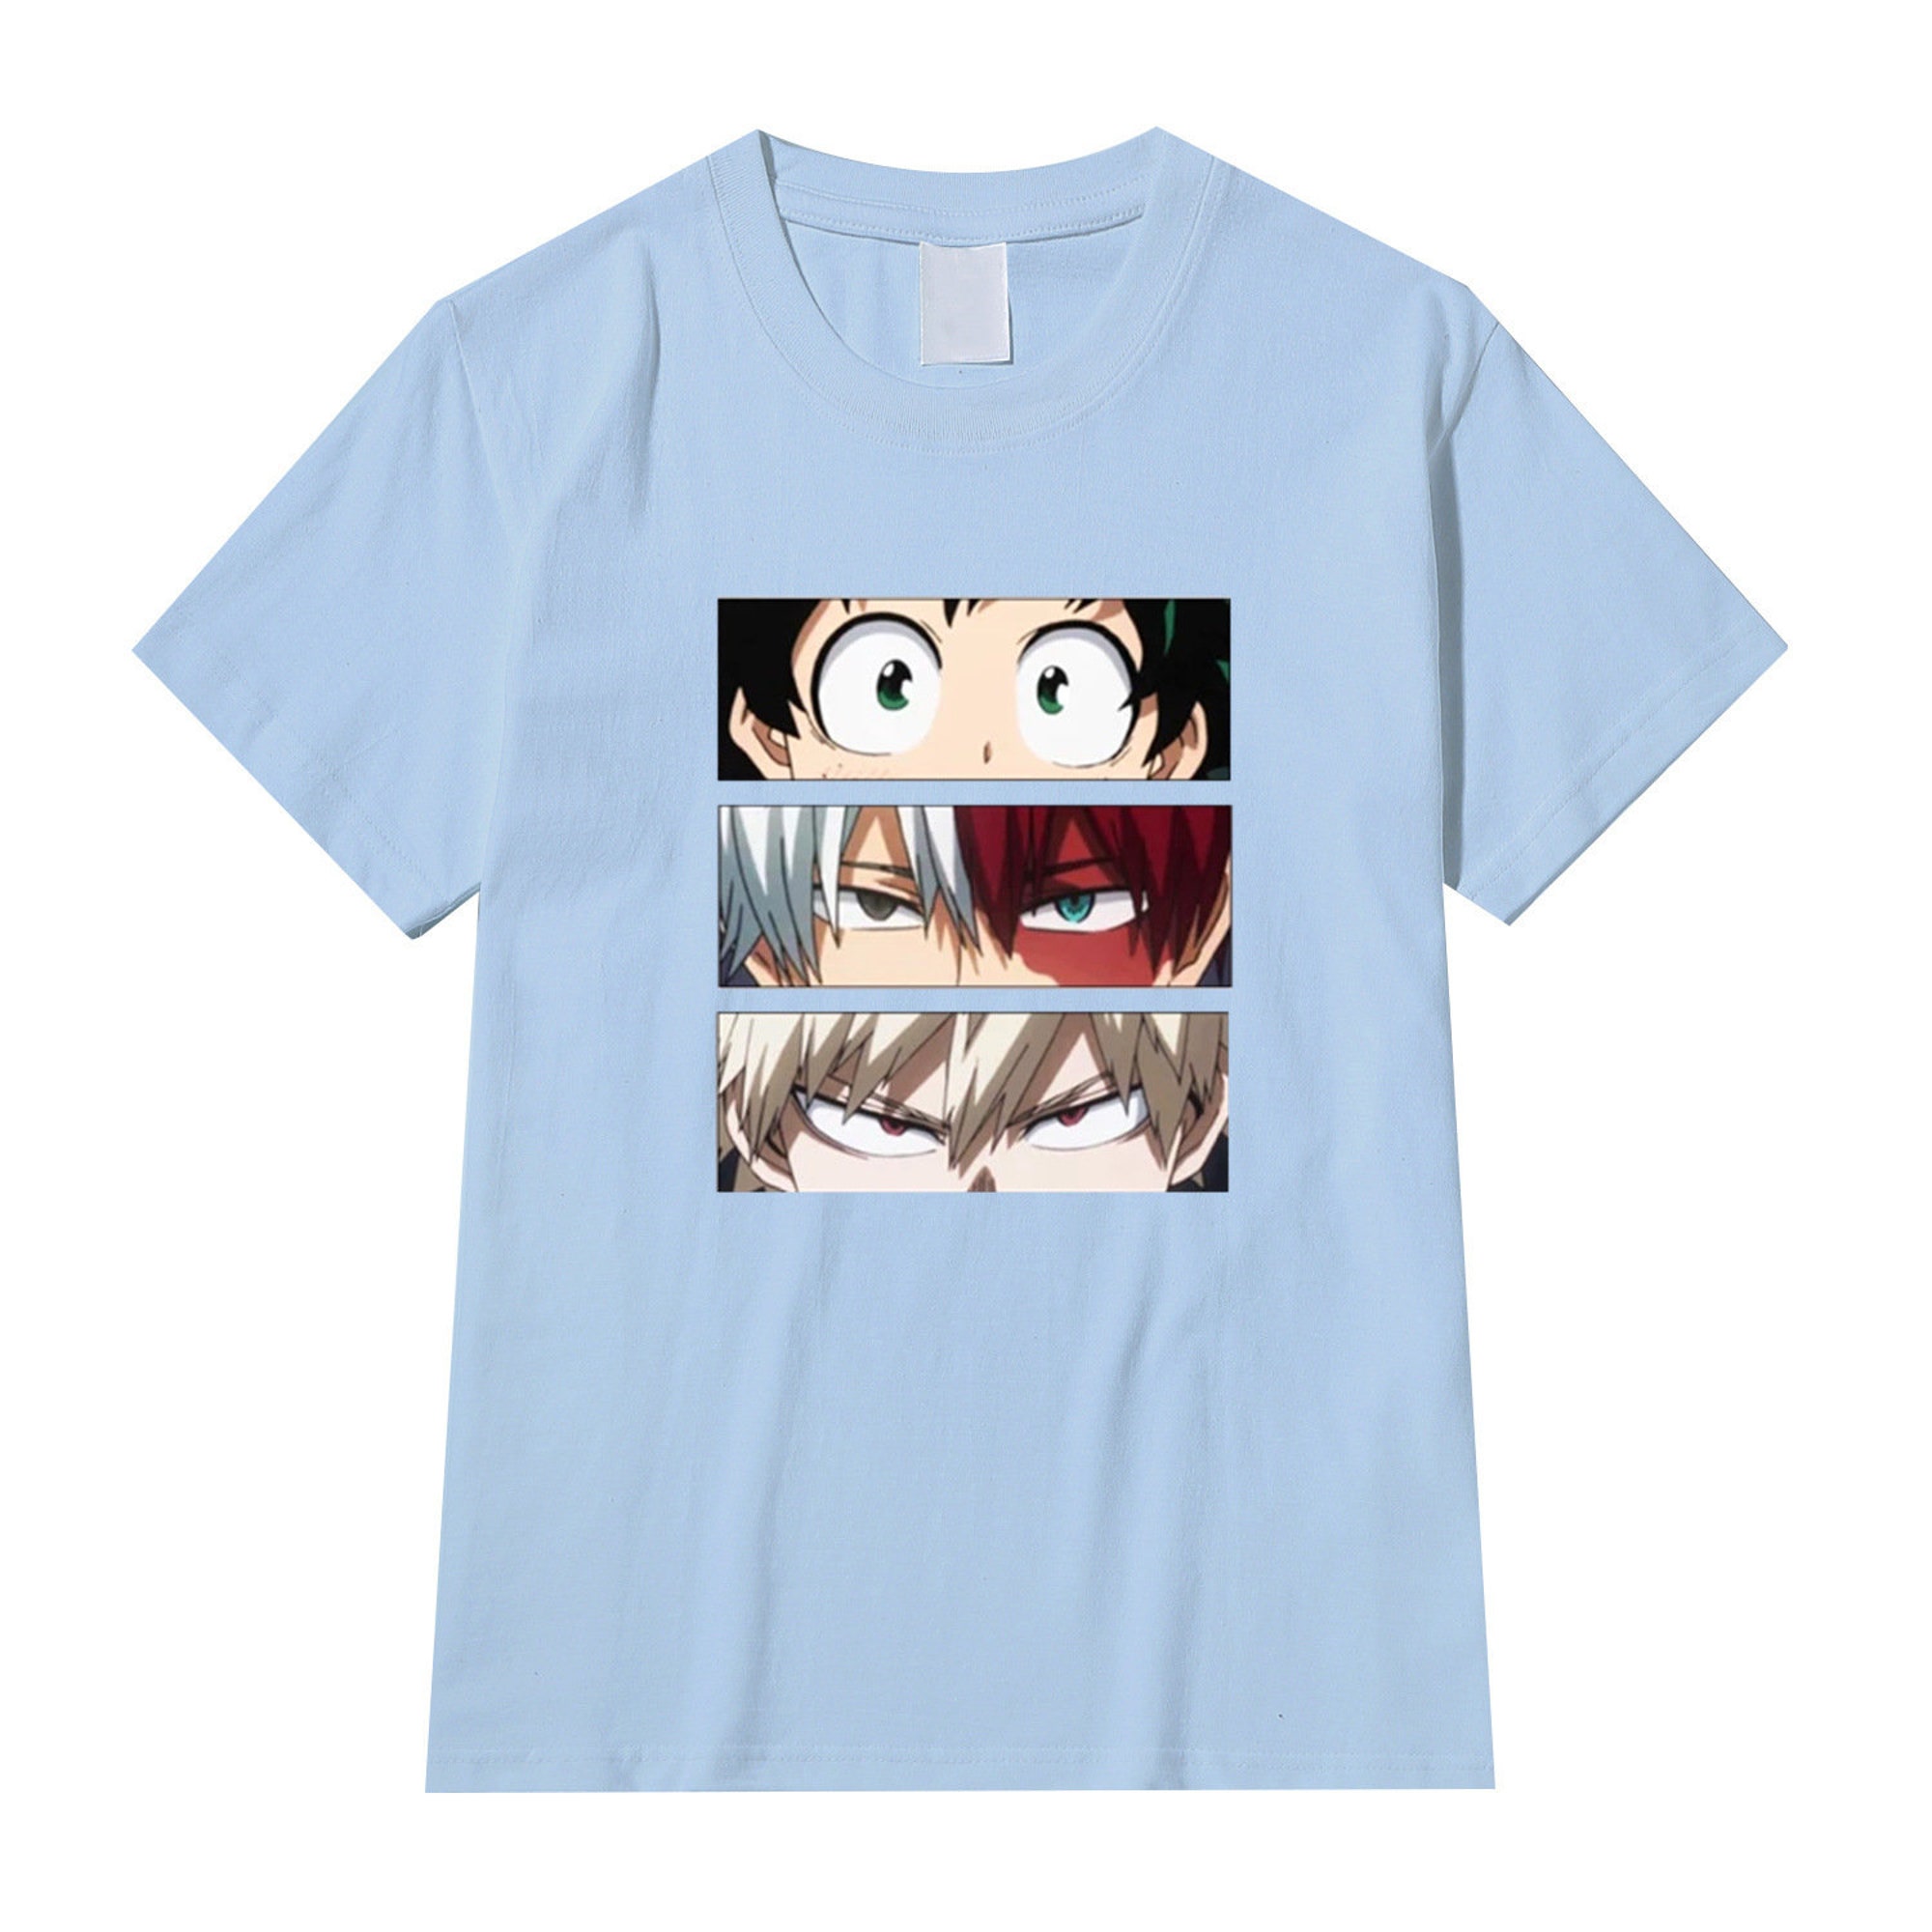 Discover My Hero Academia Shirt, Anime Graphic Tee